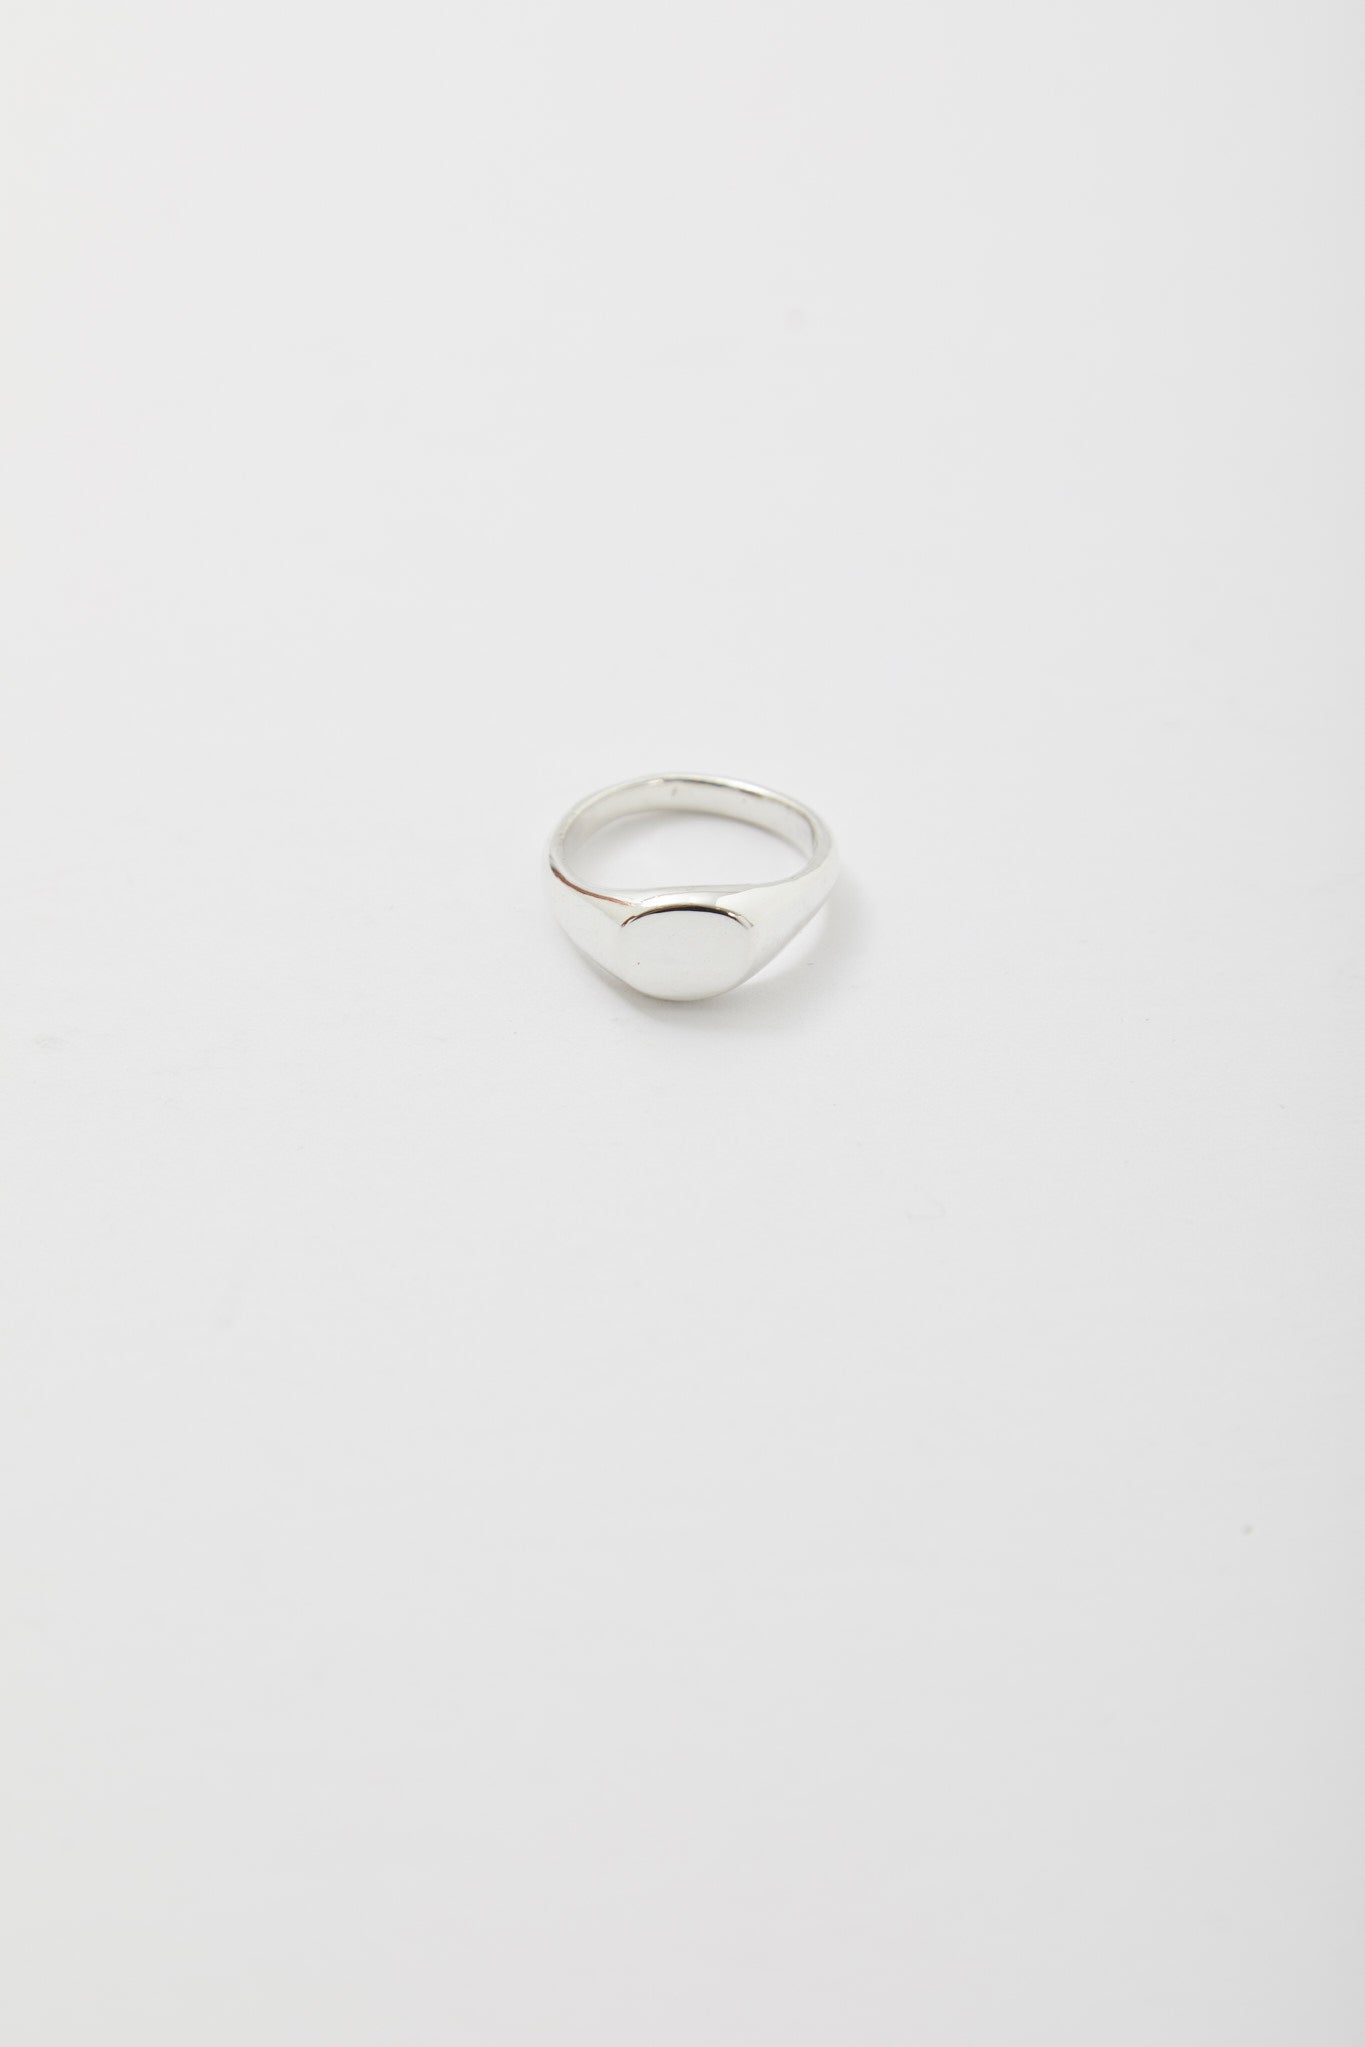 Type 001 Classic Signet Ring